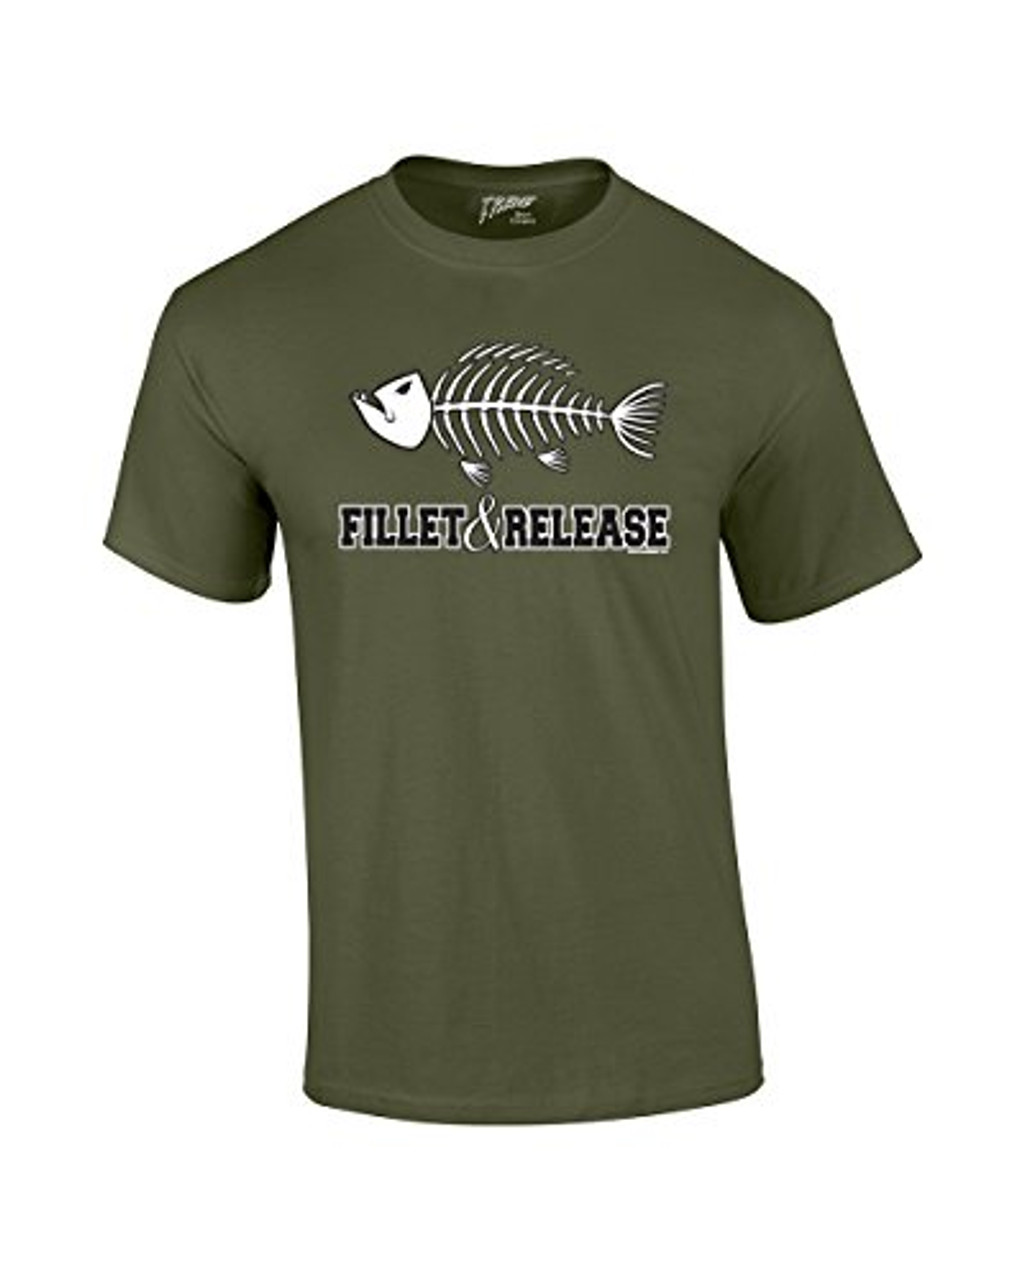 Mens Fishing T Shirt, Funny Fishing Shirt, Fishing Graphic Tee